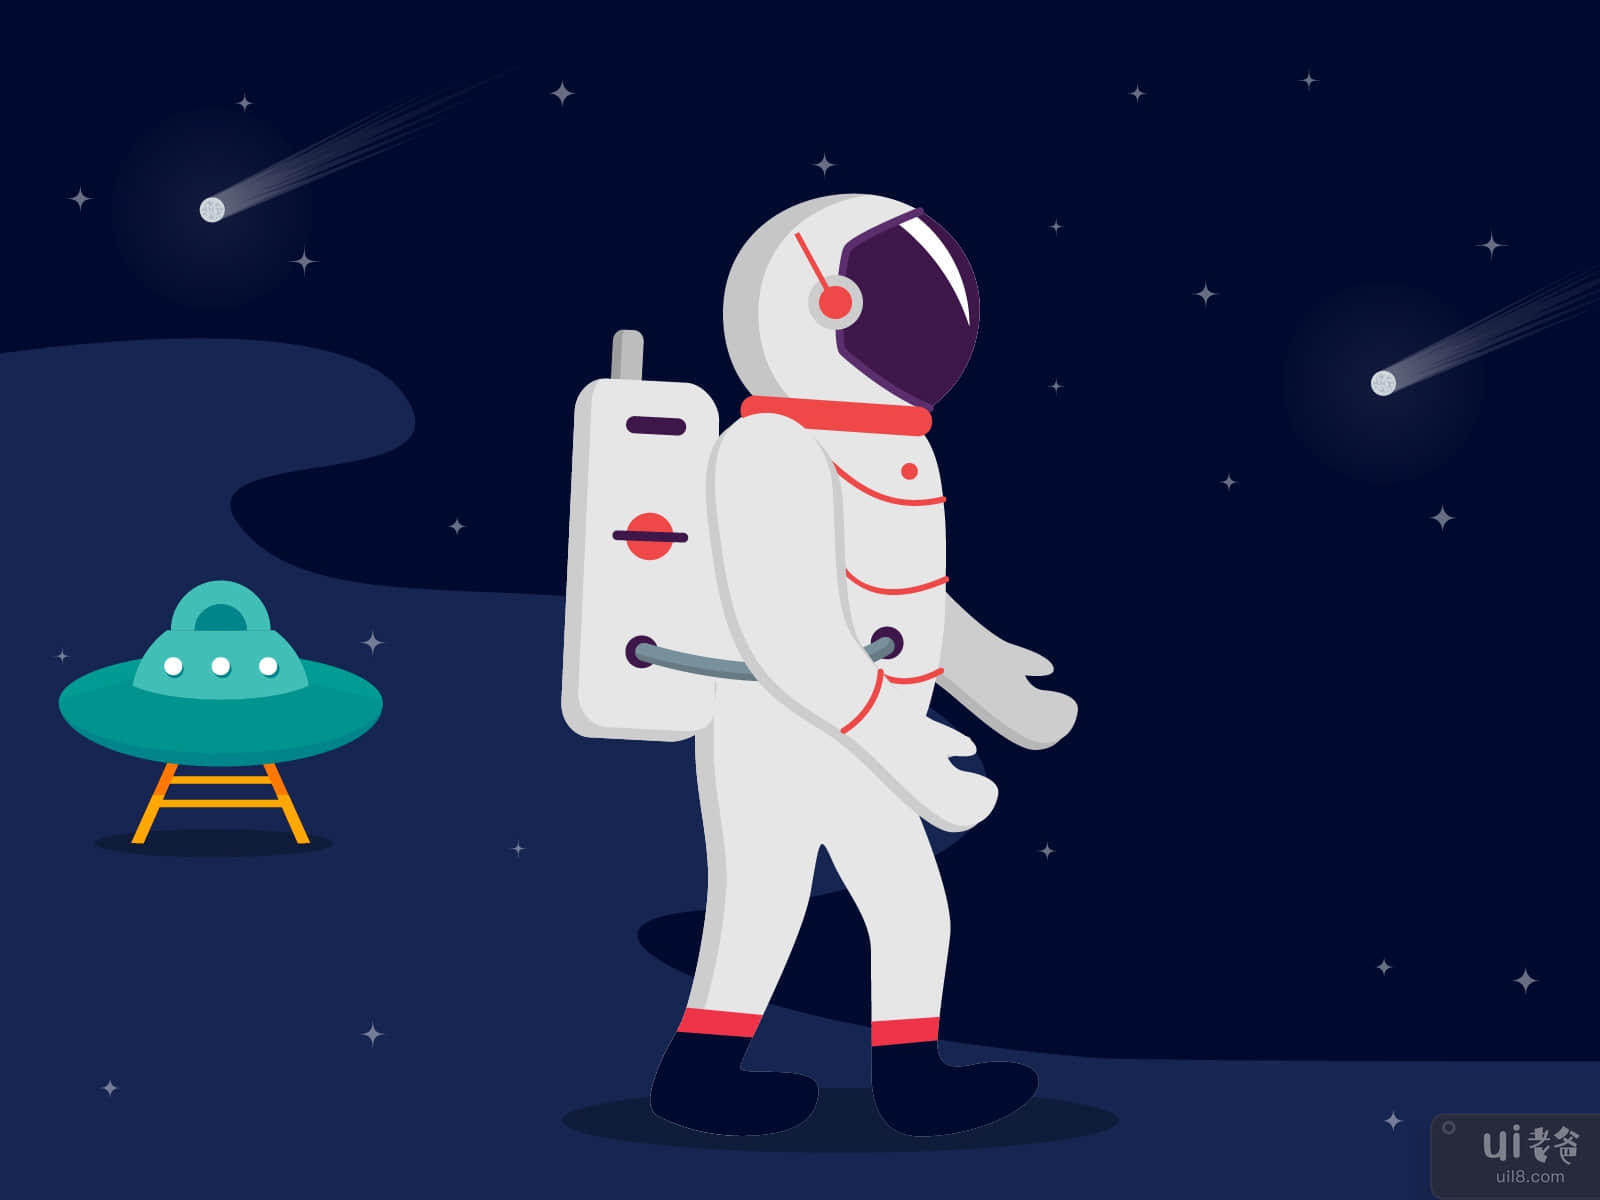 Astronaut Illustration and UFO